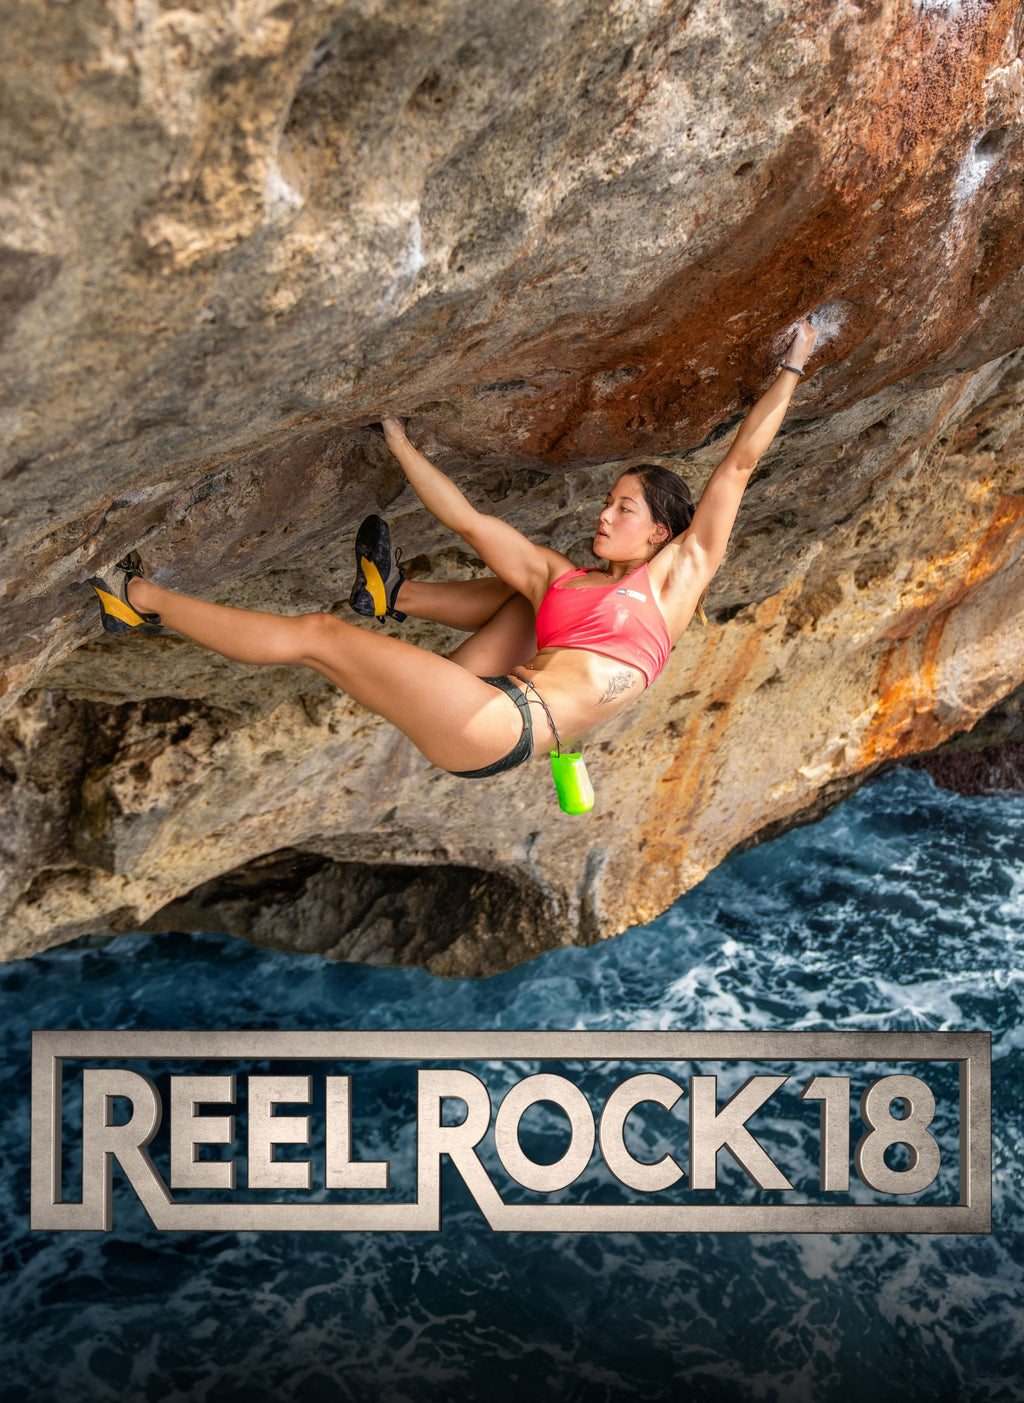 Reel Rock 18 - Stone Age Climbing Gym